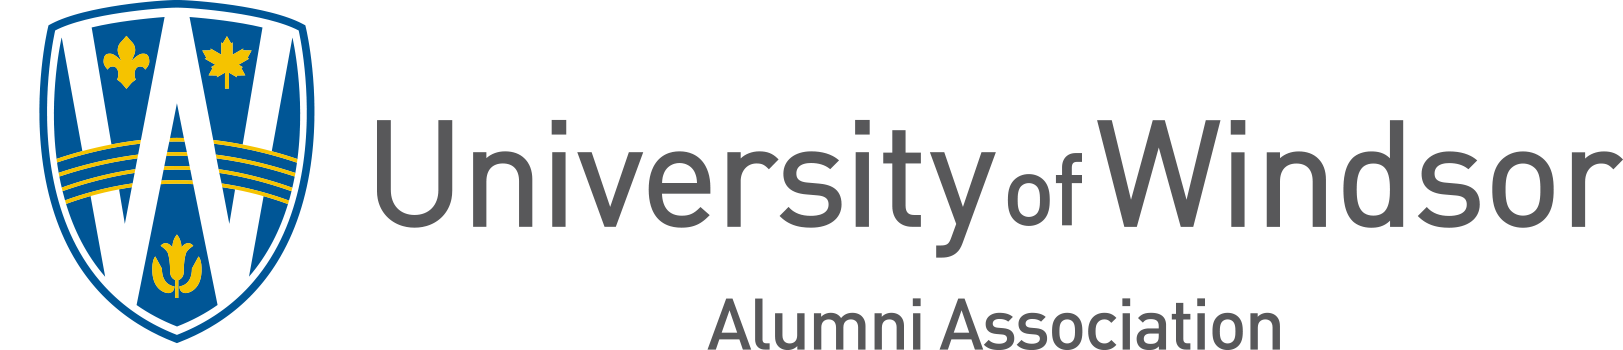 University of Windsor Alumni Association Logo